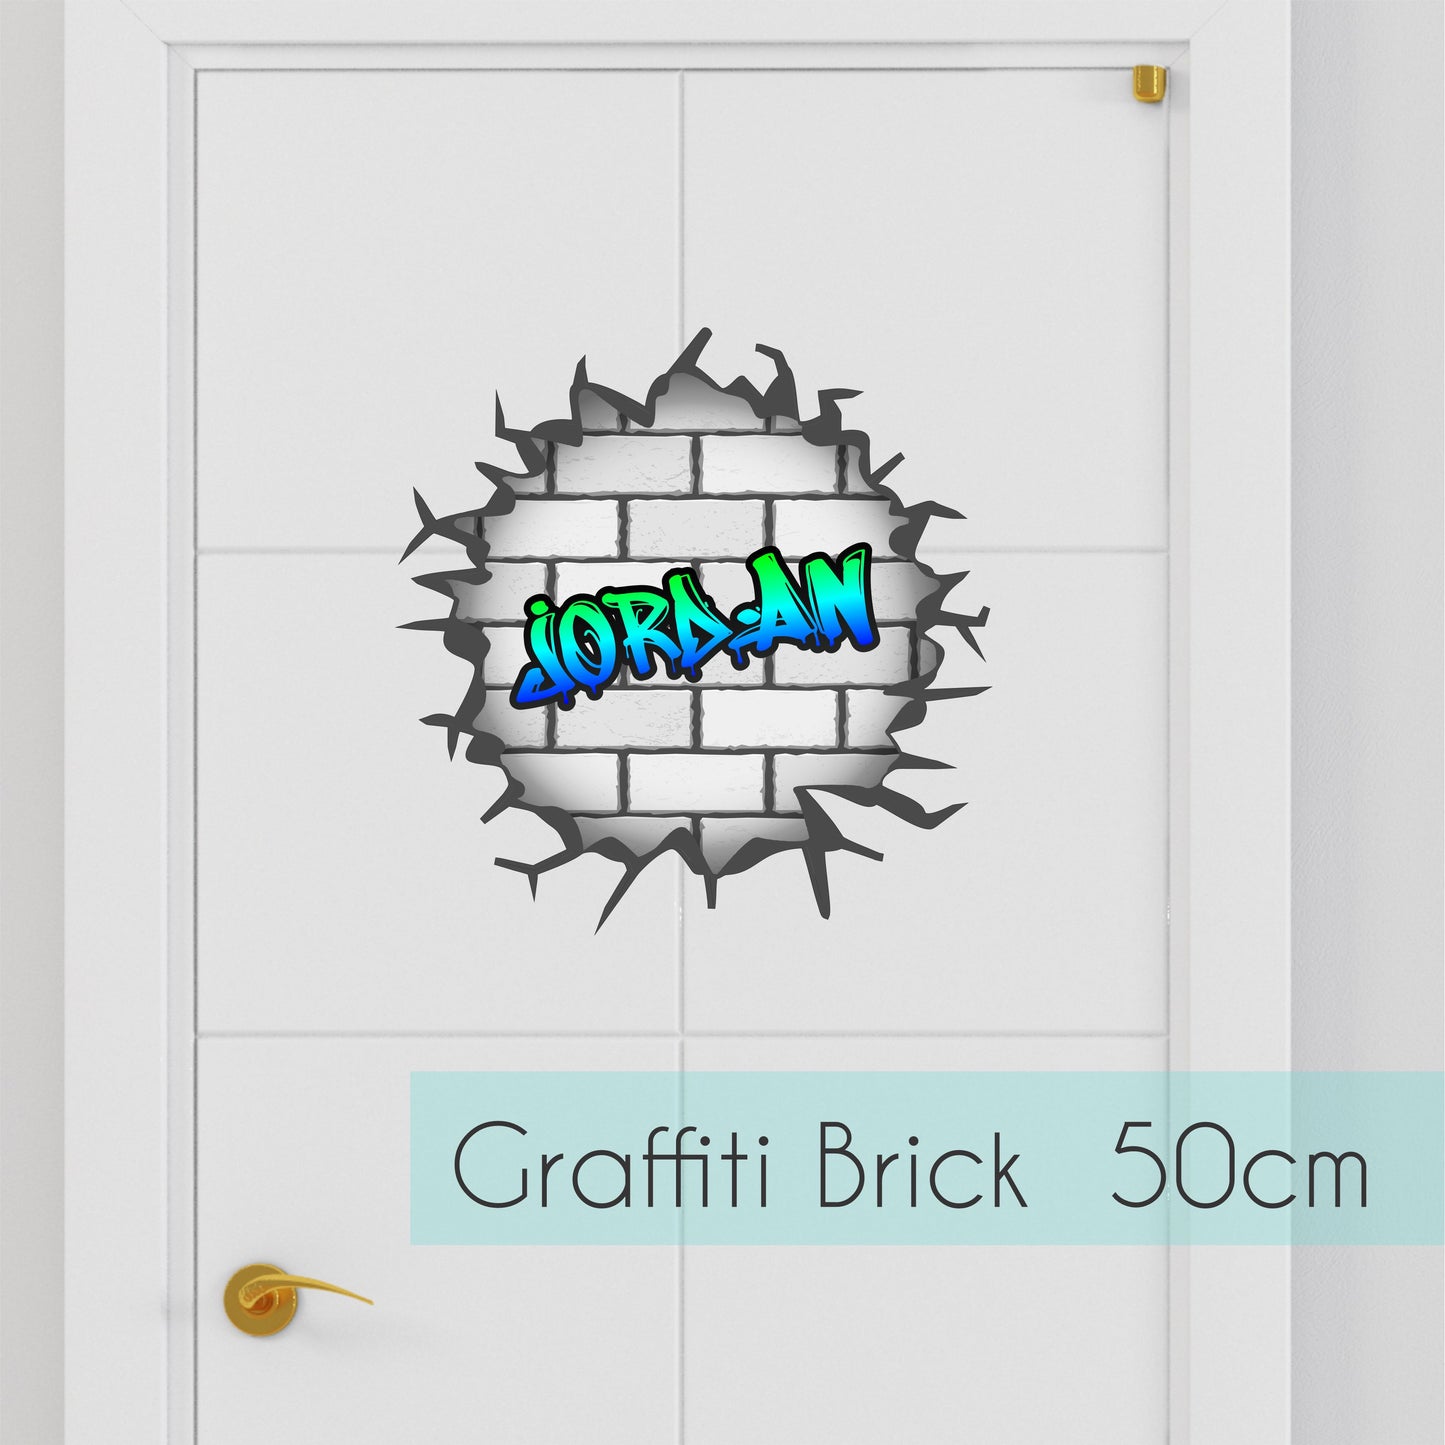 Fabric Wall/Door Name Decal